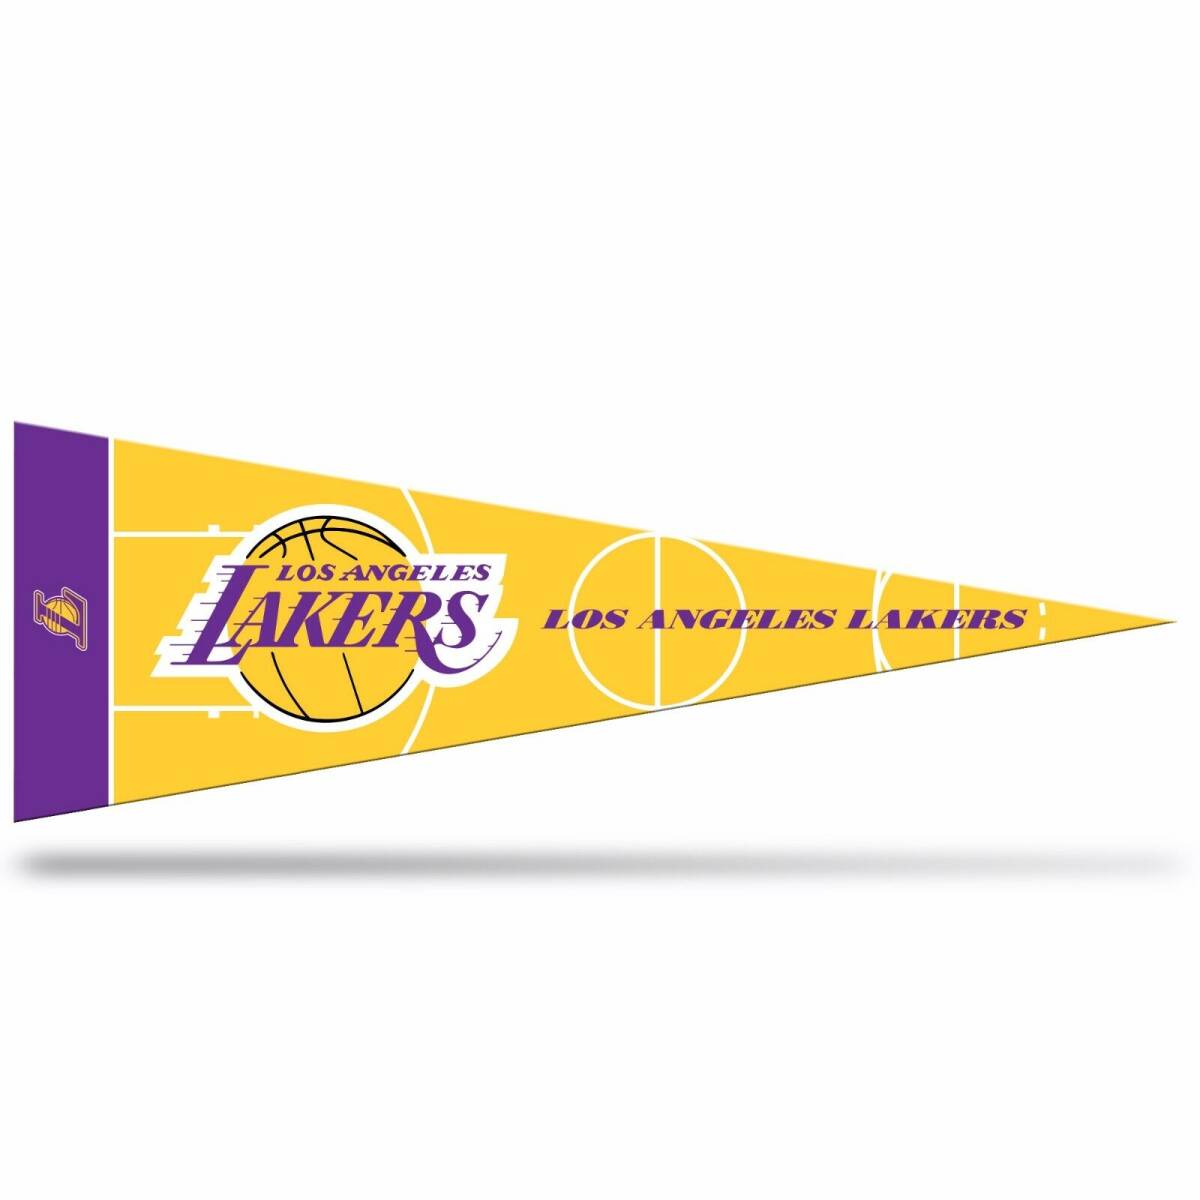 2 Los Angeles Lakers Middleman Pennants. Felt. 14-1/2" x 5". #915/807 海外 即決_2 Los Angeles Lake 1